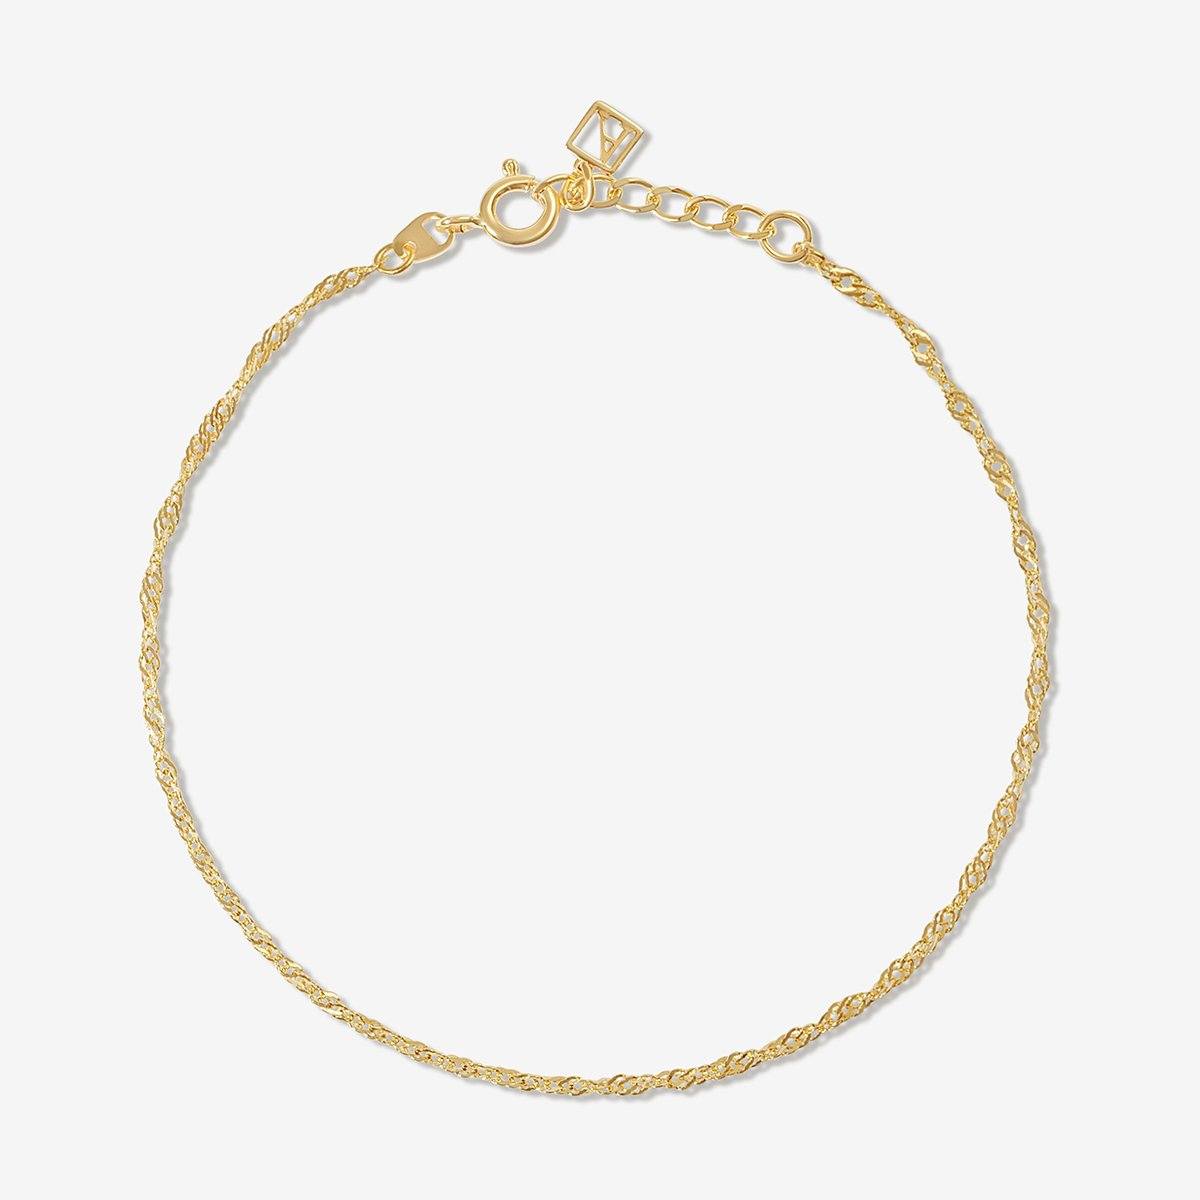 Solid 14K Gold Jonas Ornate Twisted Chain Bracelet, Fine Jewelry